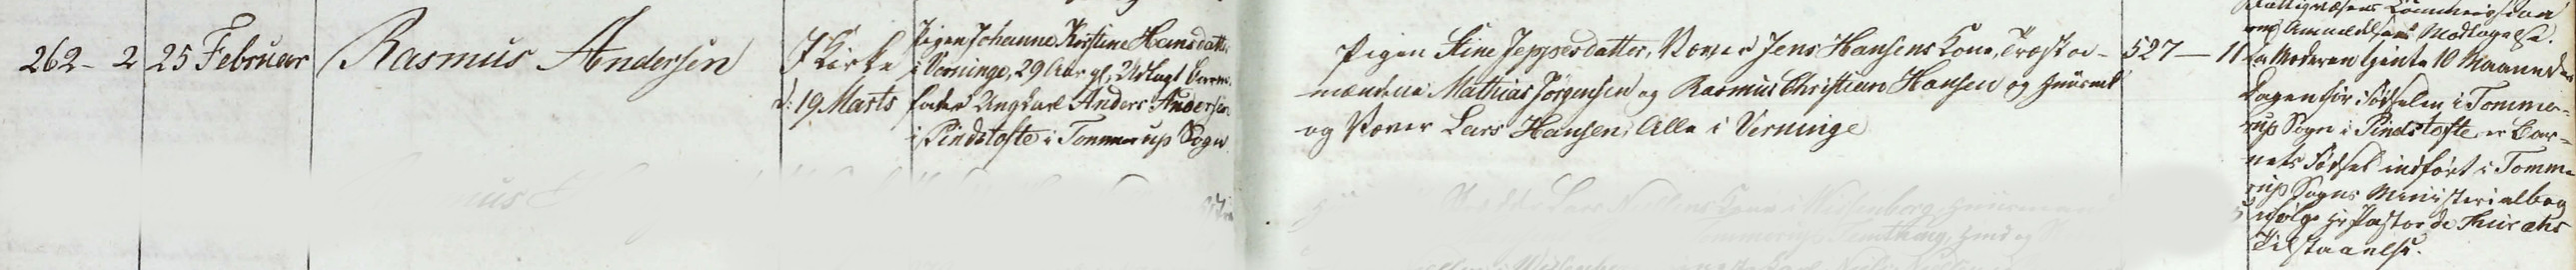 Rasmus Andersens dåb i Verninge 1854